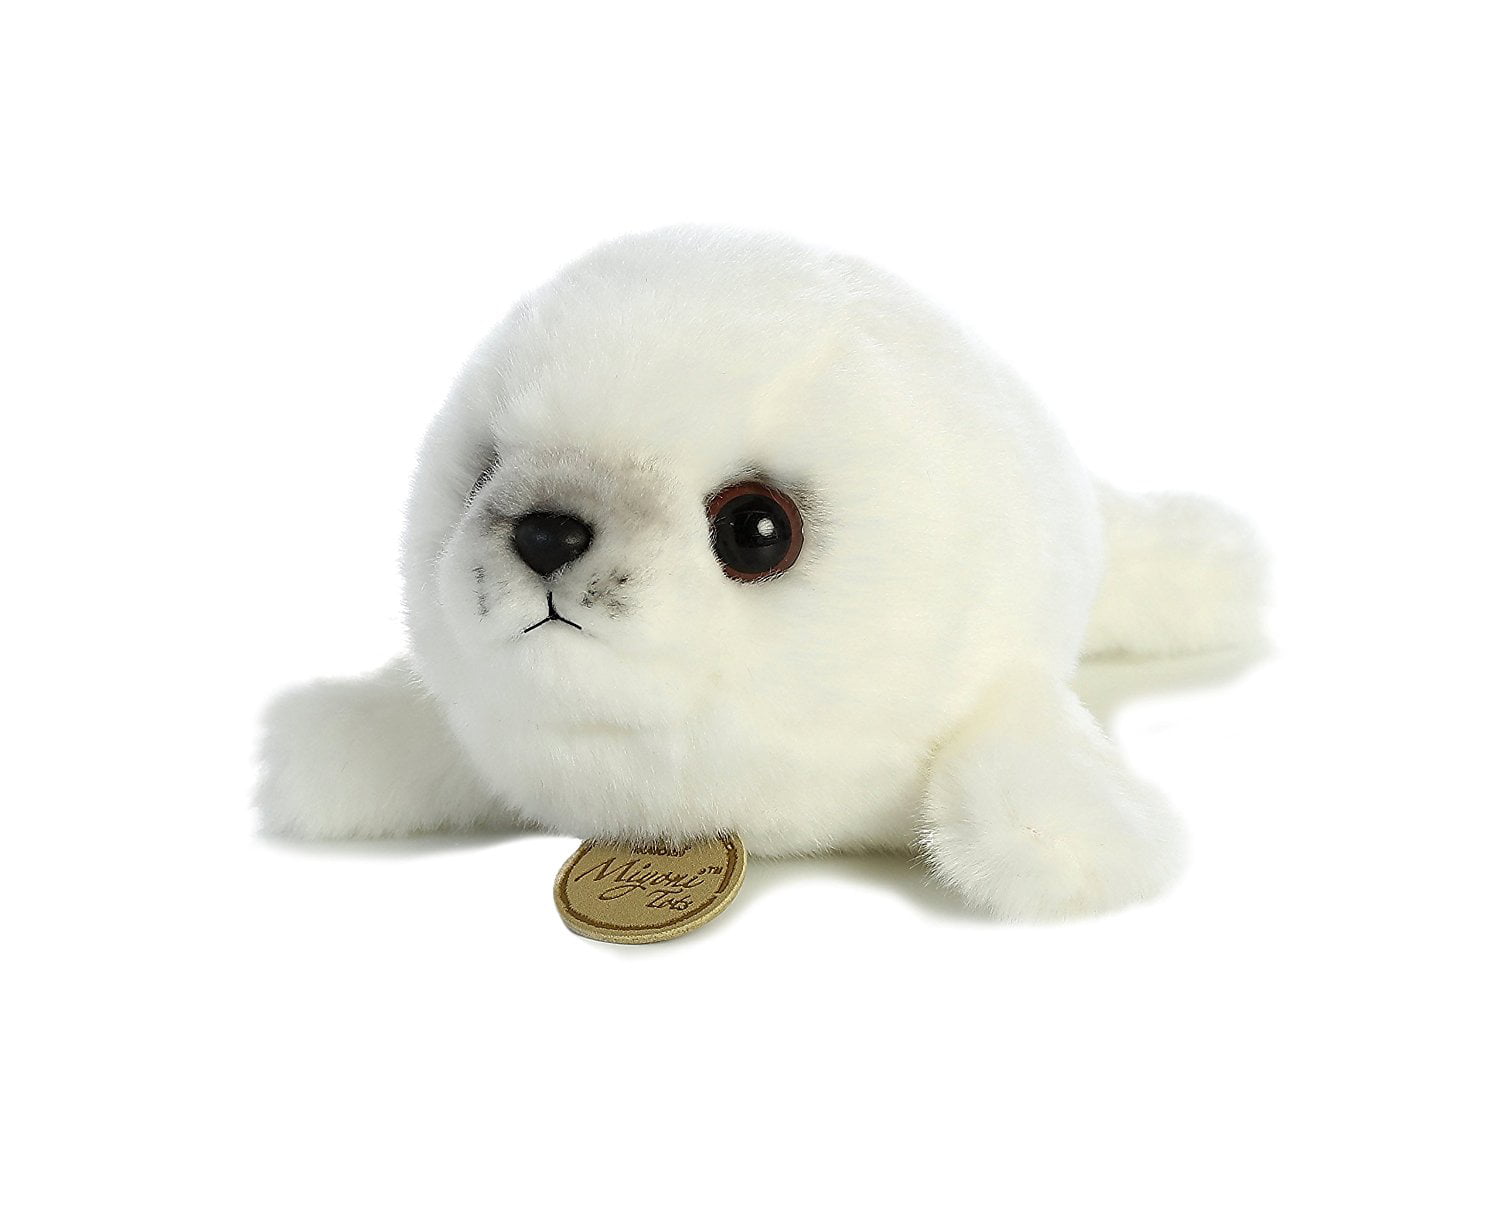 Ap-adhse for sale online 12" Seal Harp Plush Stuffed Animal Toy 